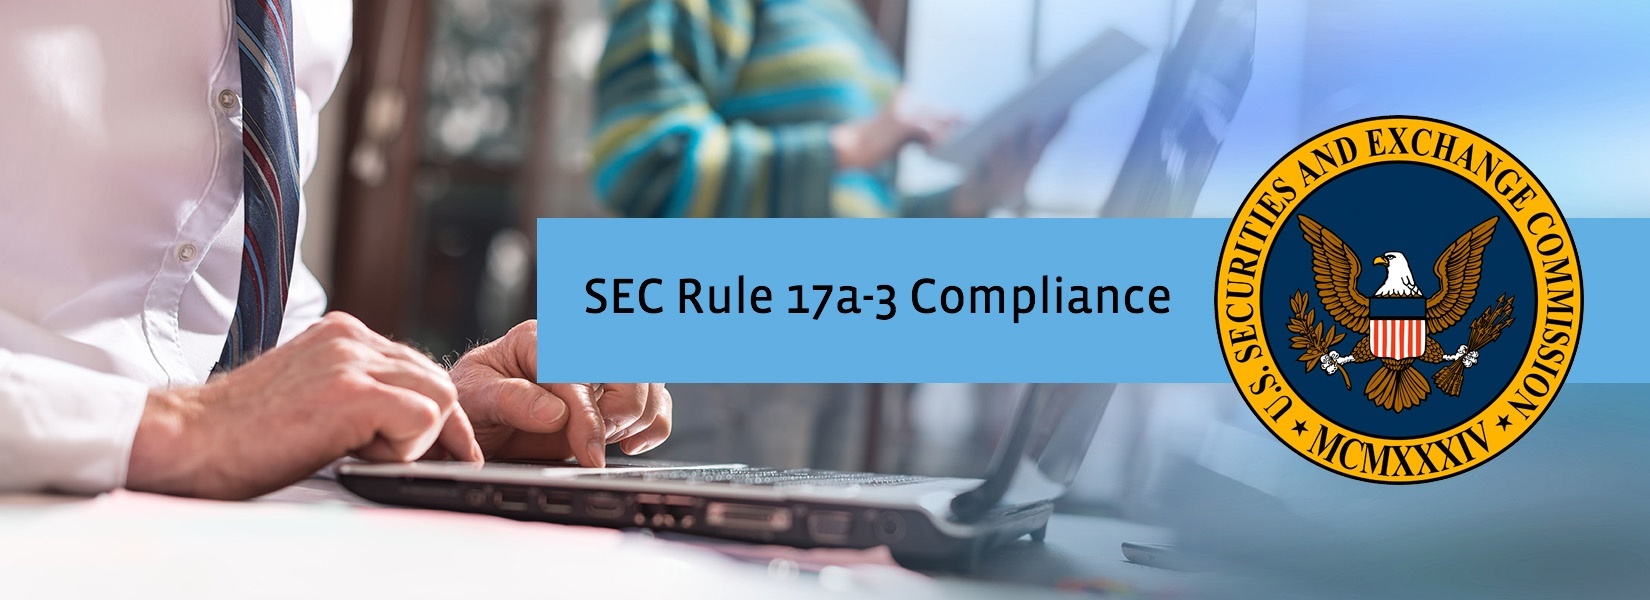 Social Media dn SEC Rule 17a-3 Compliance